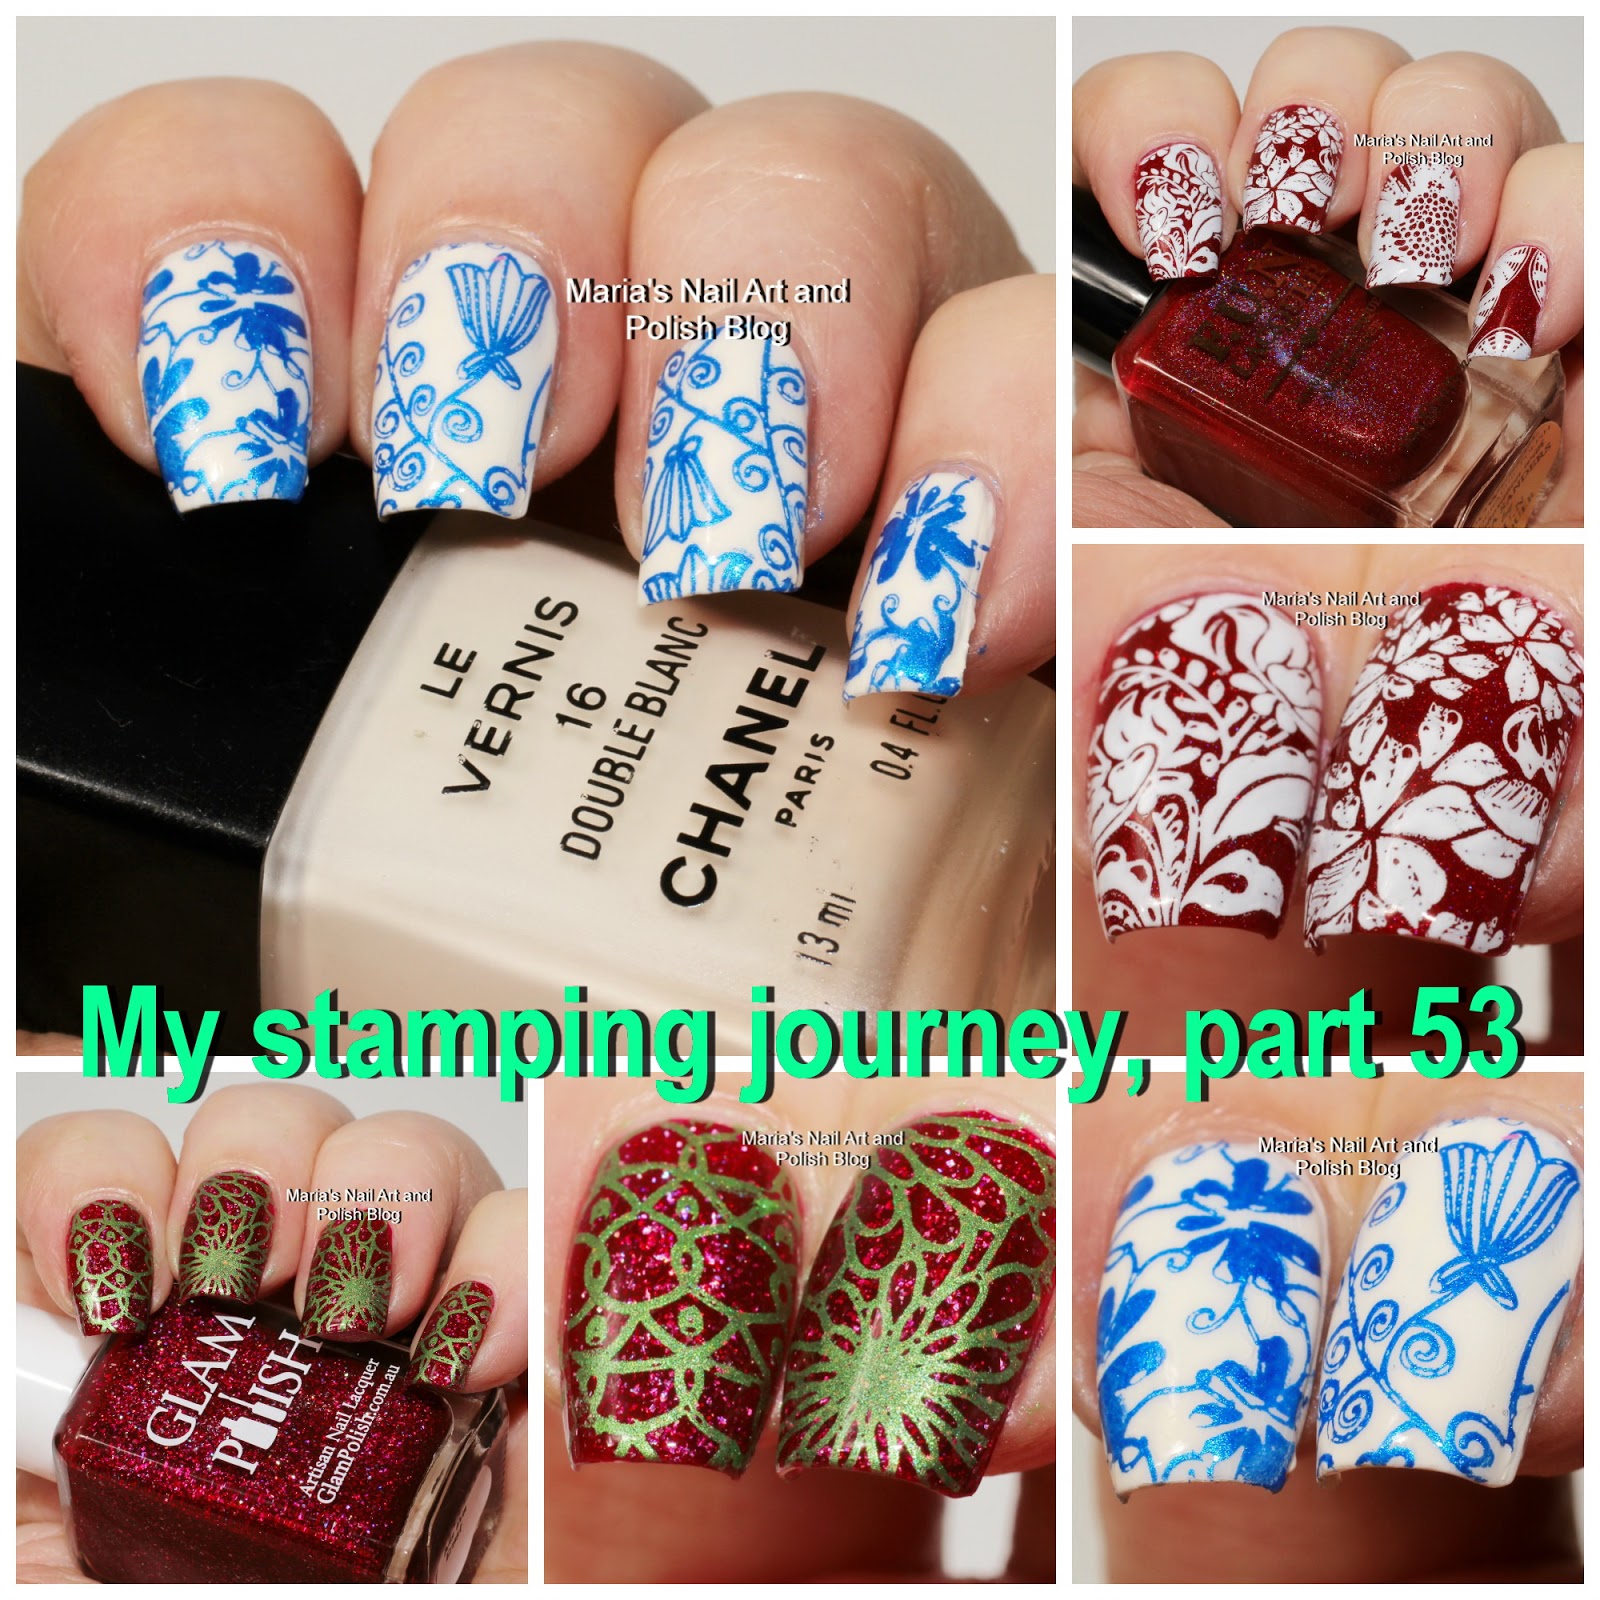 Marias Nail Art and Polish Blog: My stamping journey - part 18